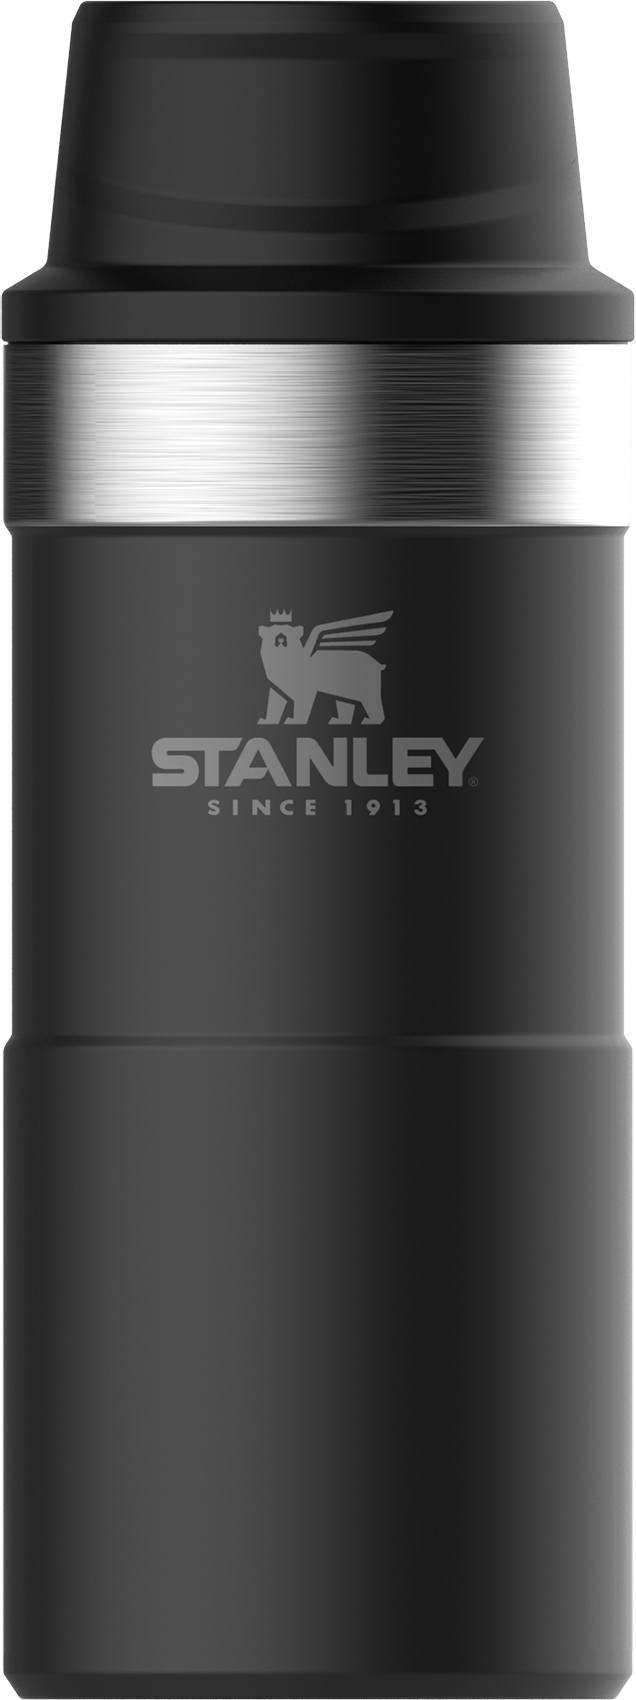 https://3fa-media.com/stanley/stanley-trigger-classic-insulated-mug-0-35-l-black__71924_be23dc1-s2500x2500.jpg